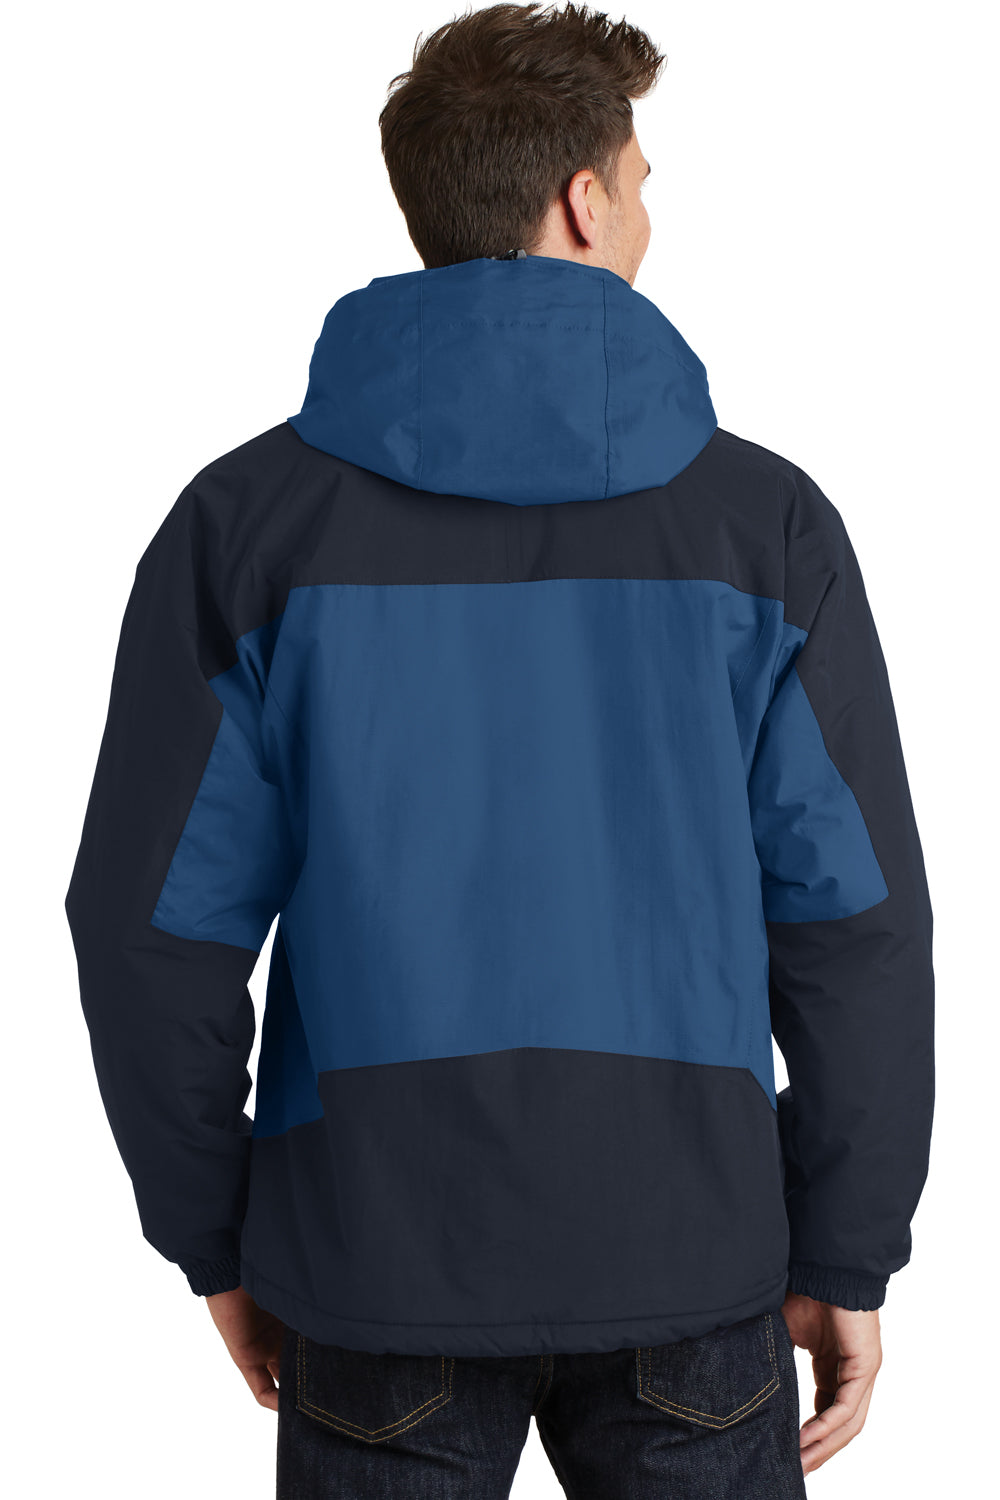 Port Authority J792 Mens Nootka Waterproof Full Zip Hooded Jacket Regatta Blue/Navy Blue Back